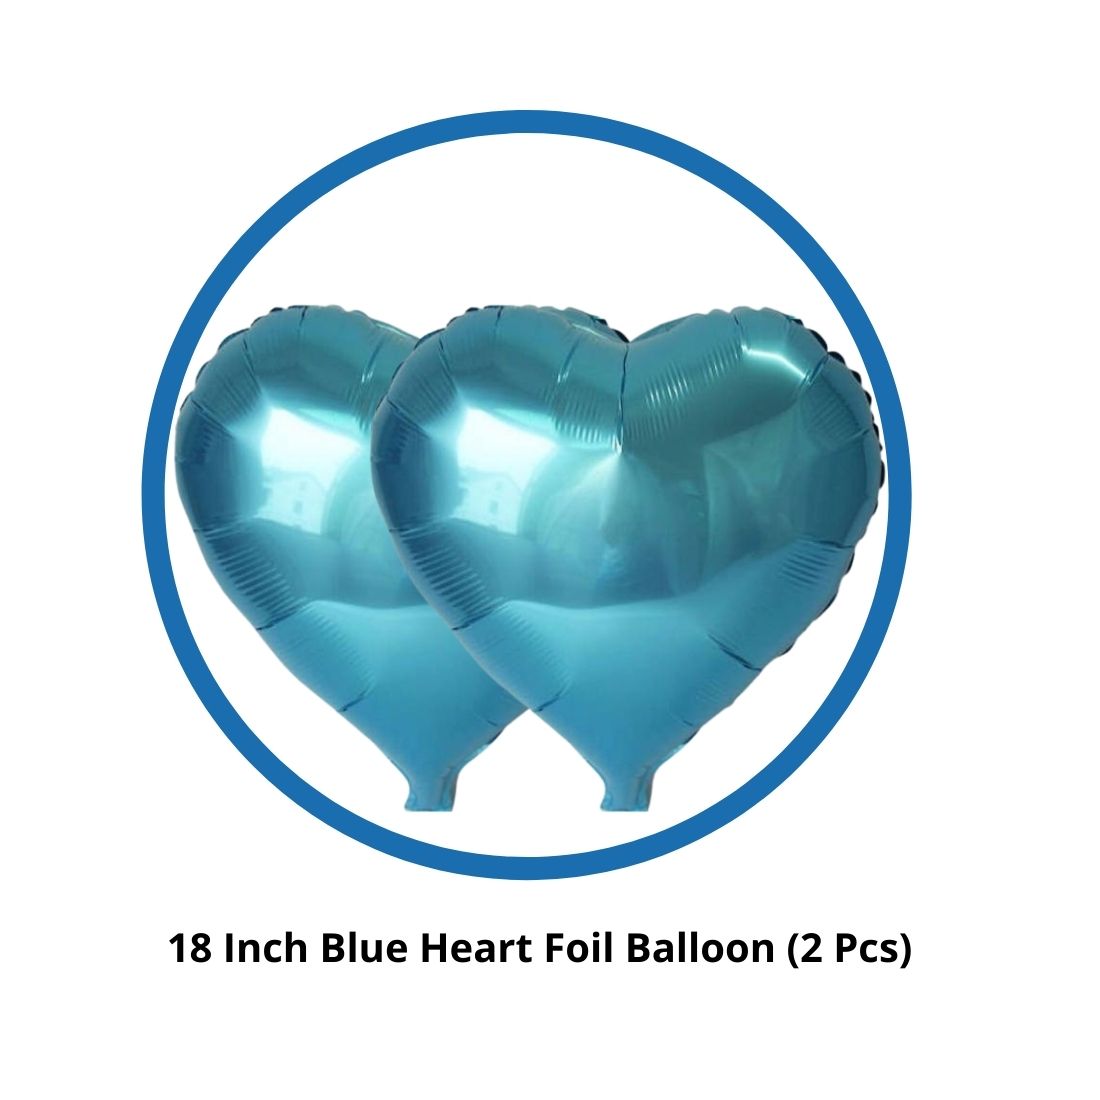 Blue Boys Prince Crown Foil Balloons Set for Boys Theme Birthday Party (set of 5)